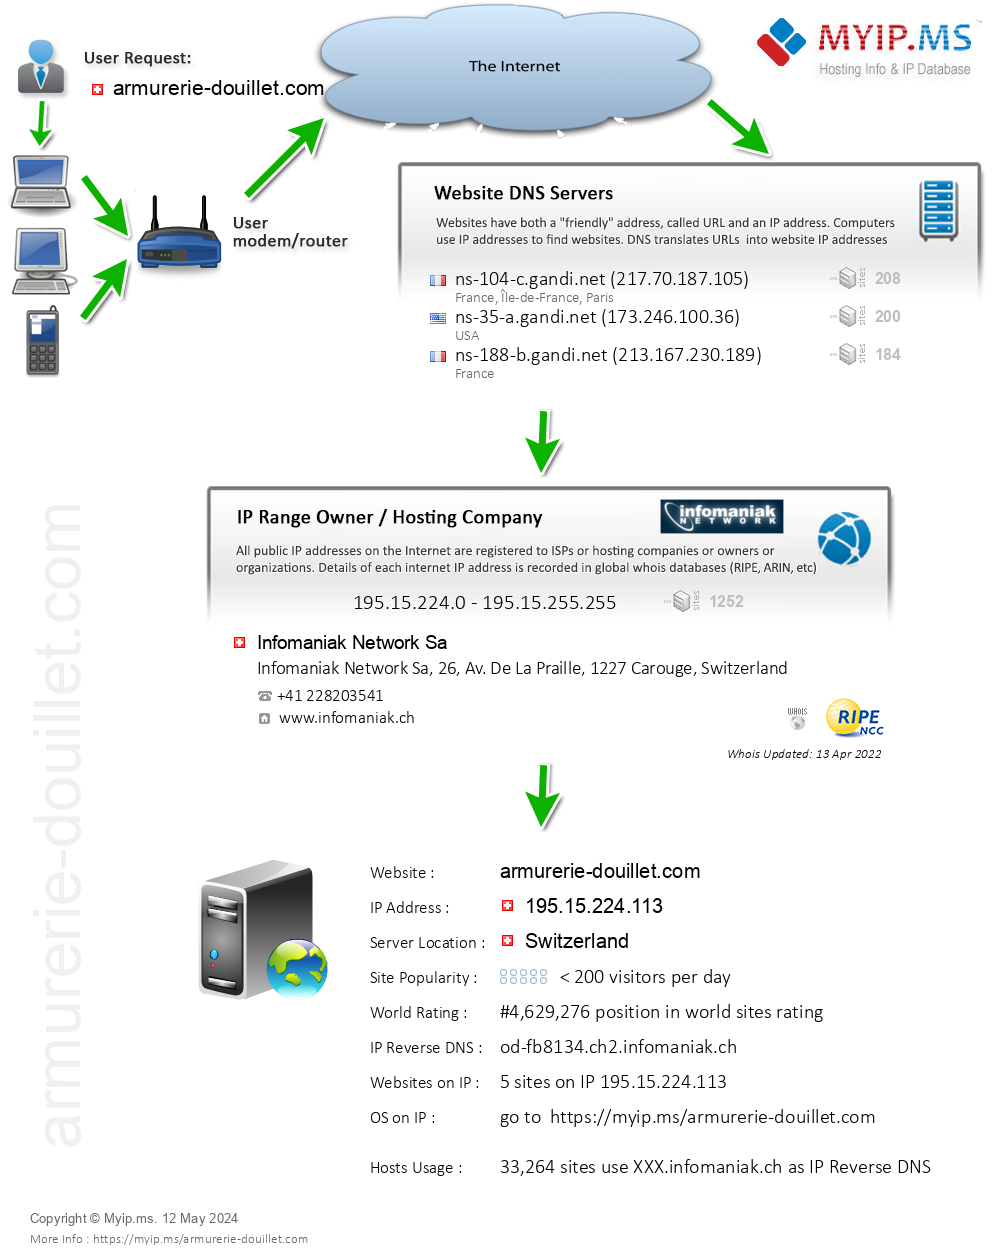 Armurerie-douillet.com - Website Hosting Visual IP Diagram